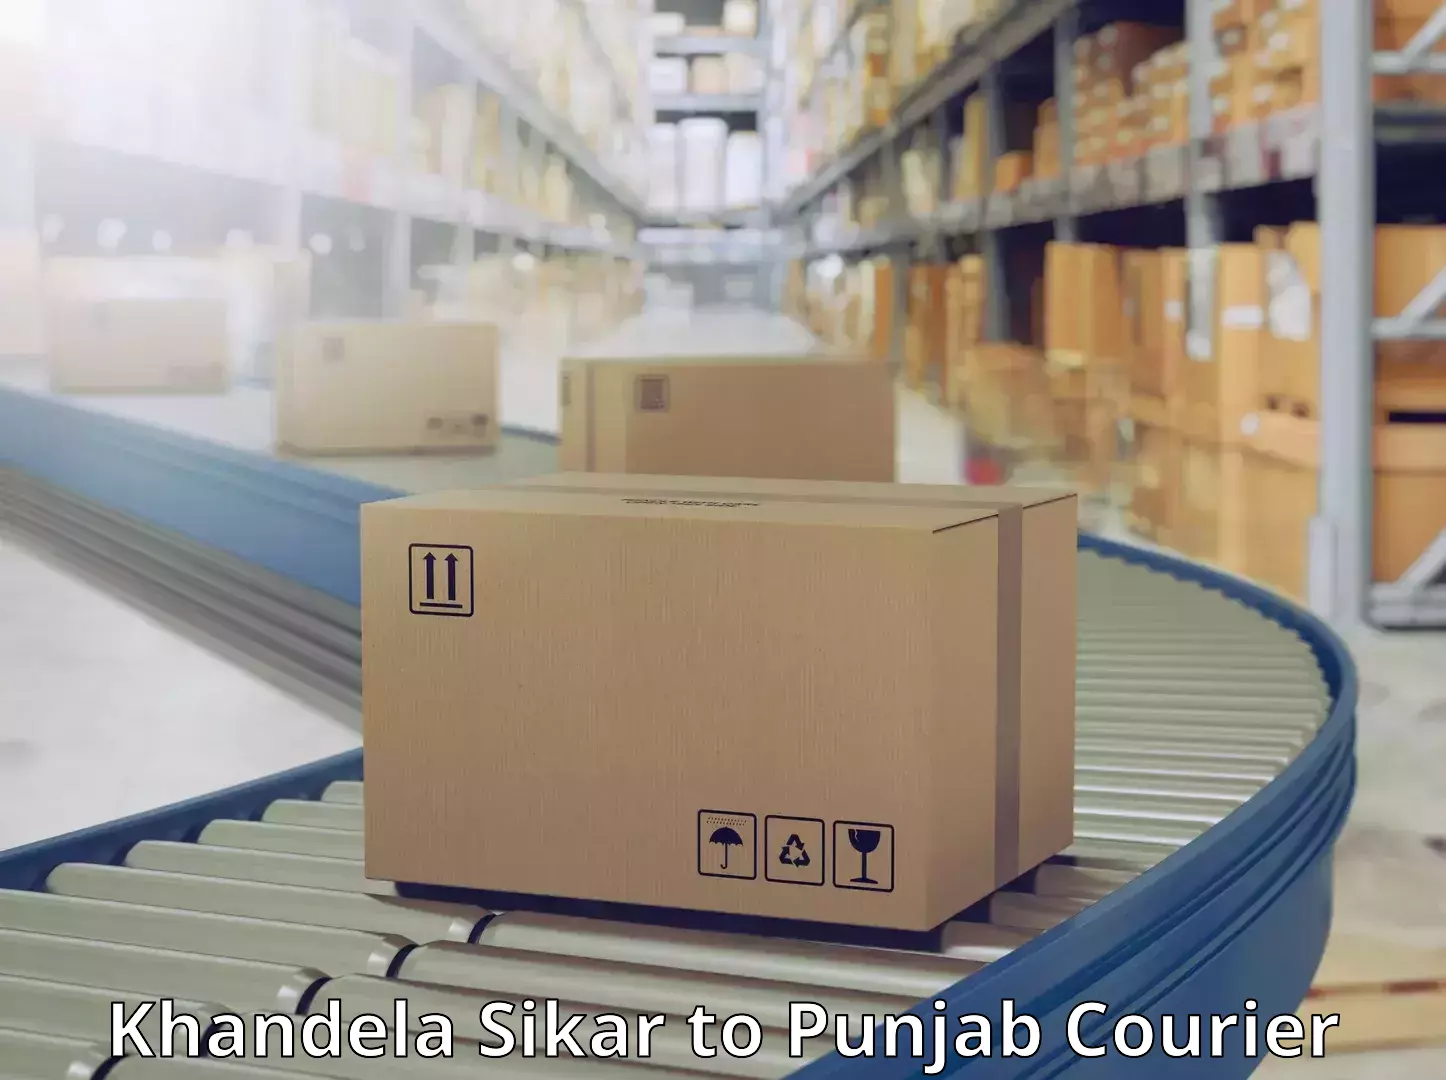 Holiday shipping services Khandela Sikar to Punjab